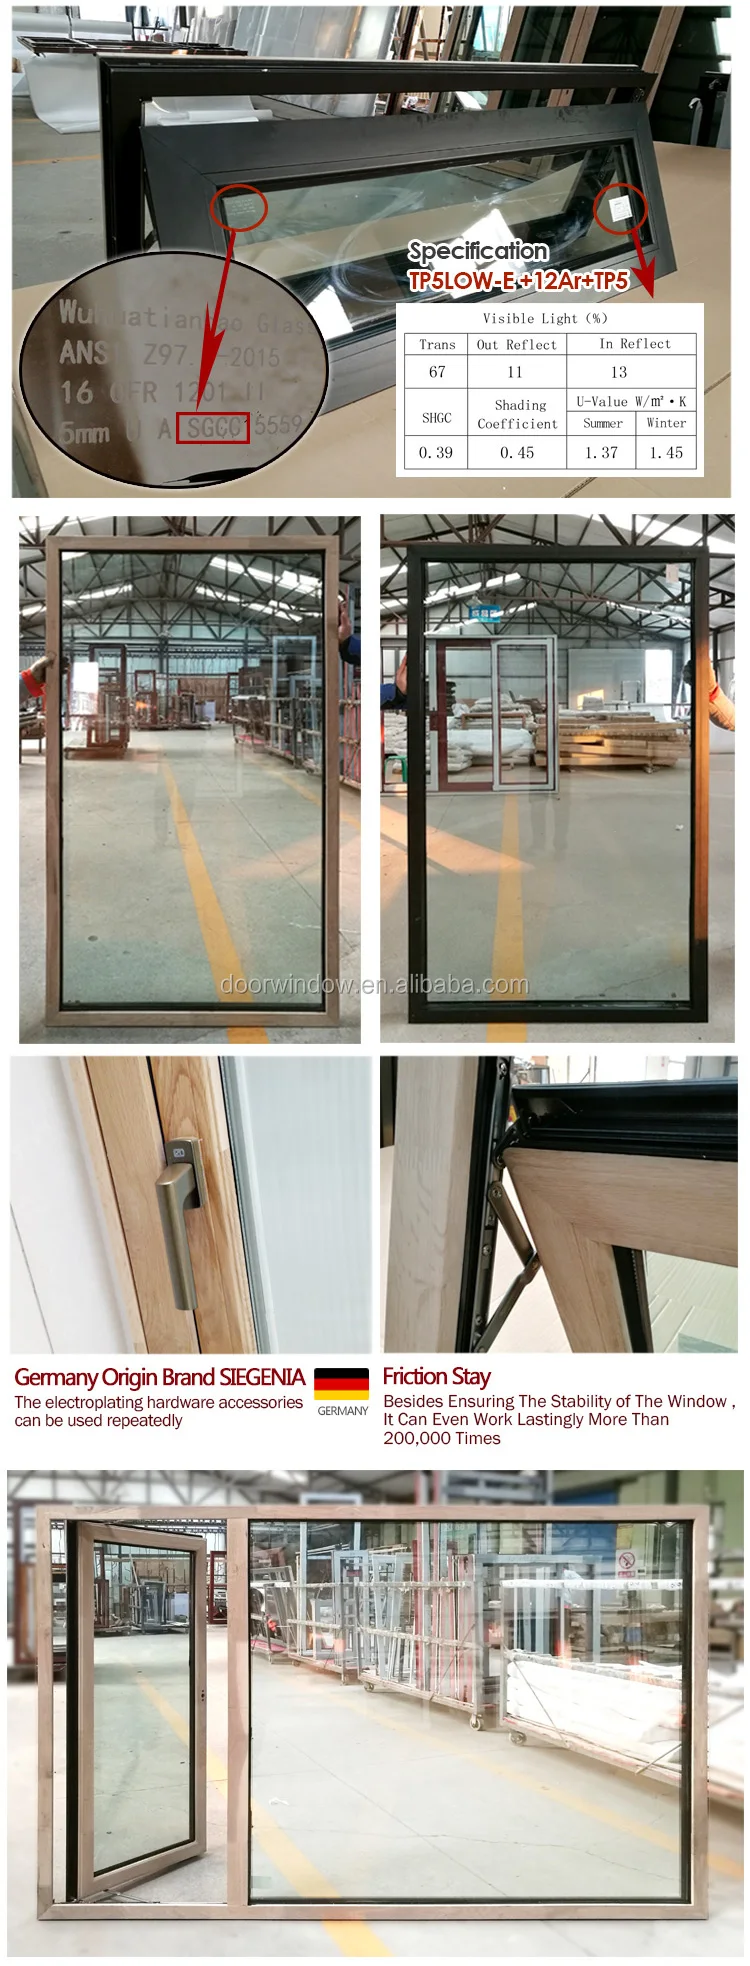 Supplier aluminium windows awning window design